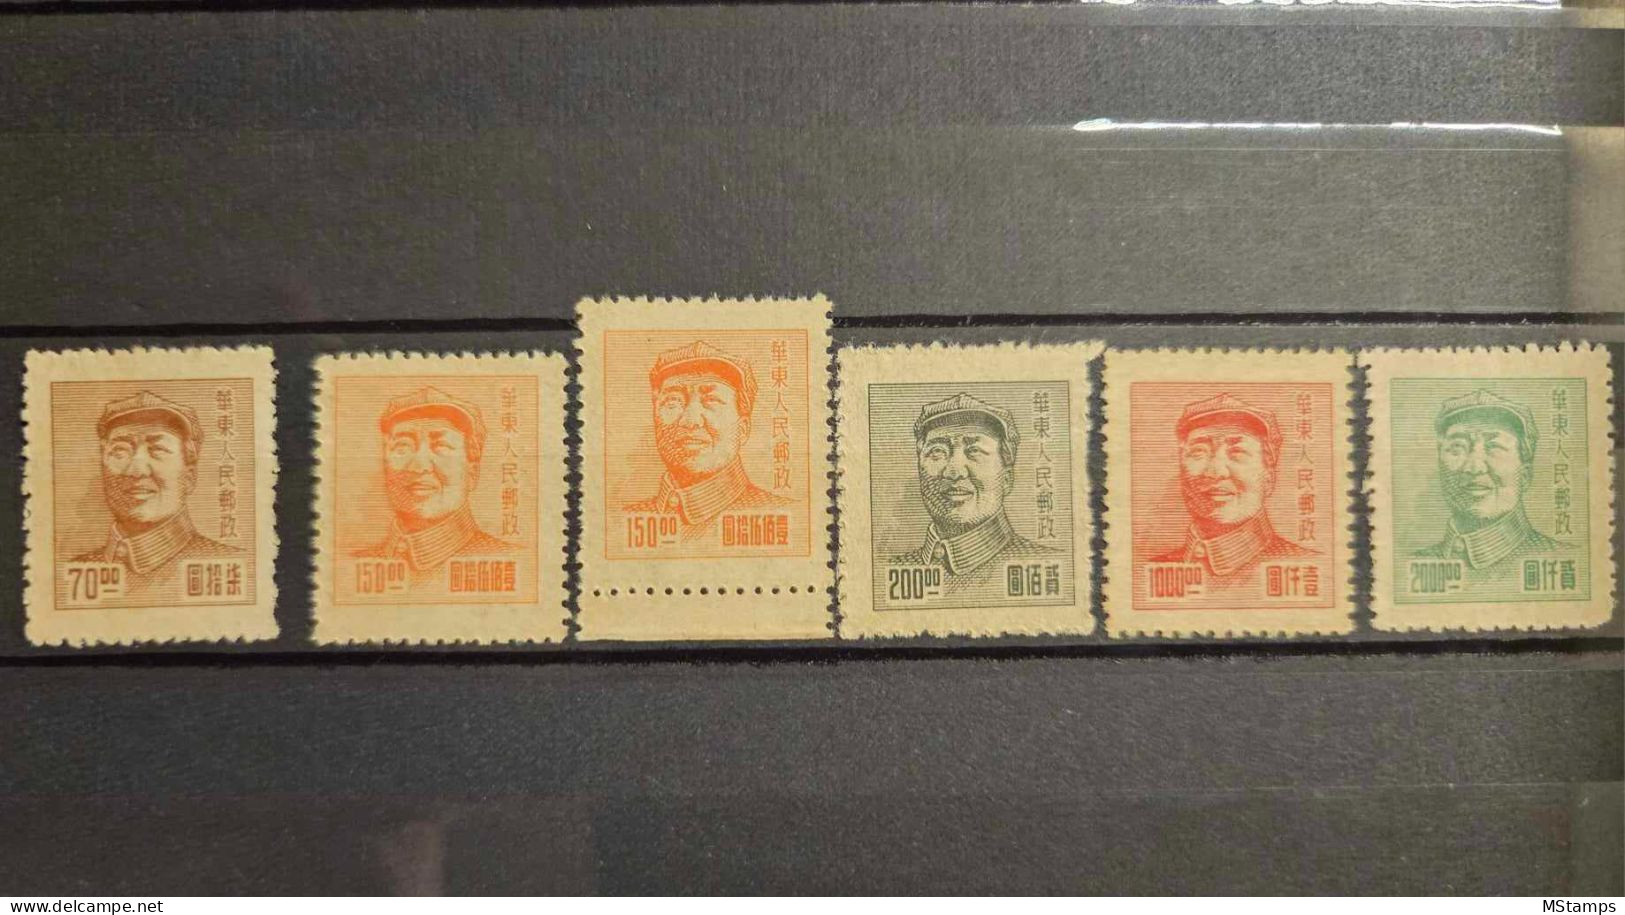 CHINA stamp BIG lot mixed